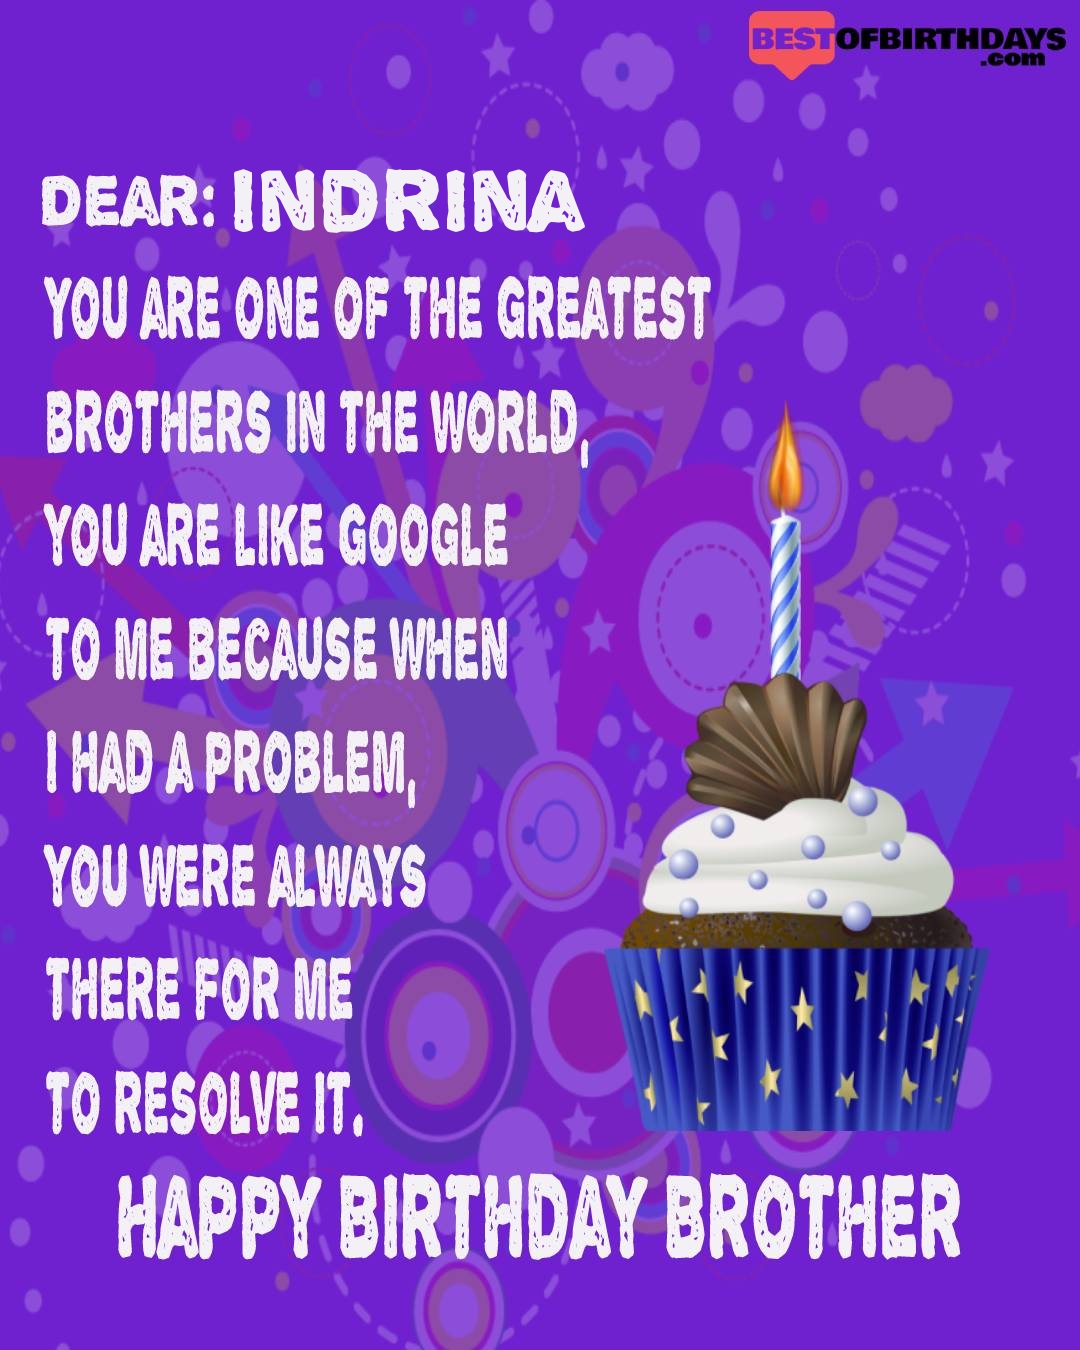 Happy birthday indrina bhai brother bro